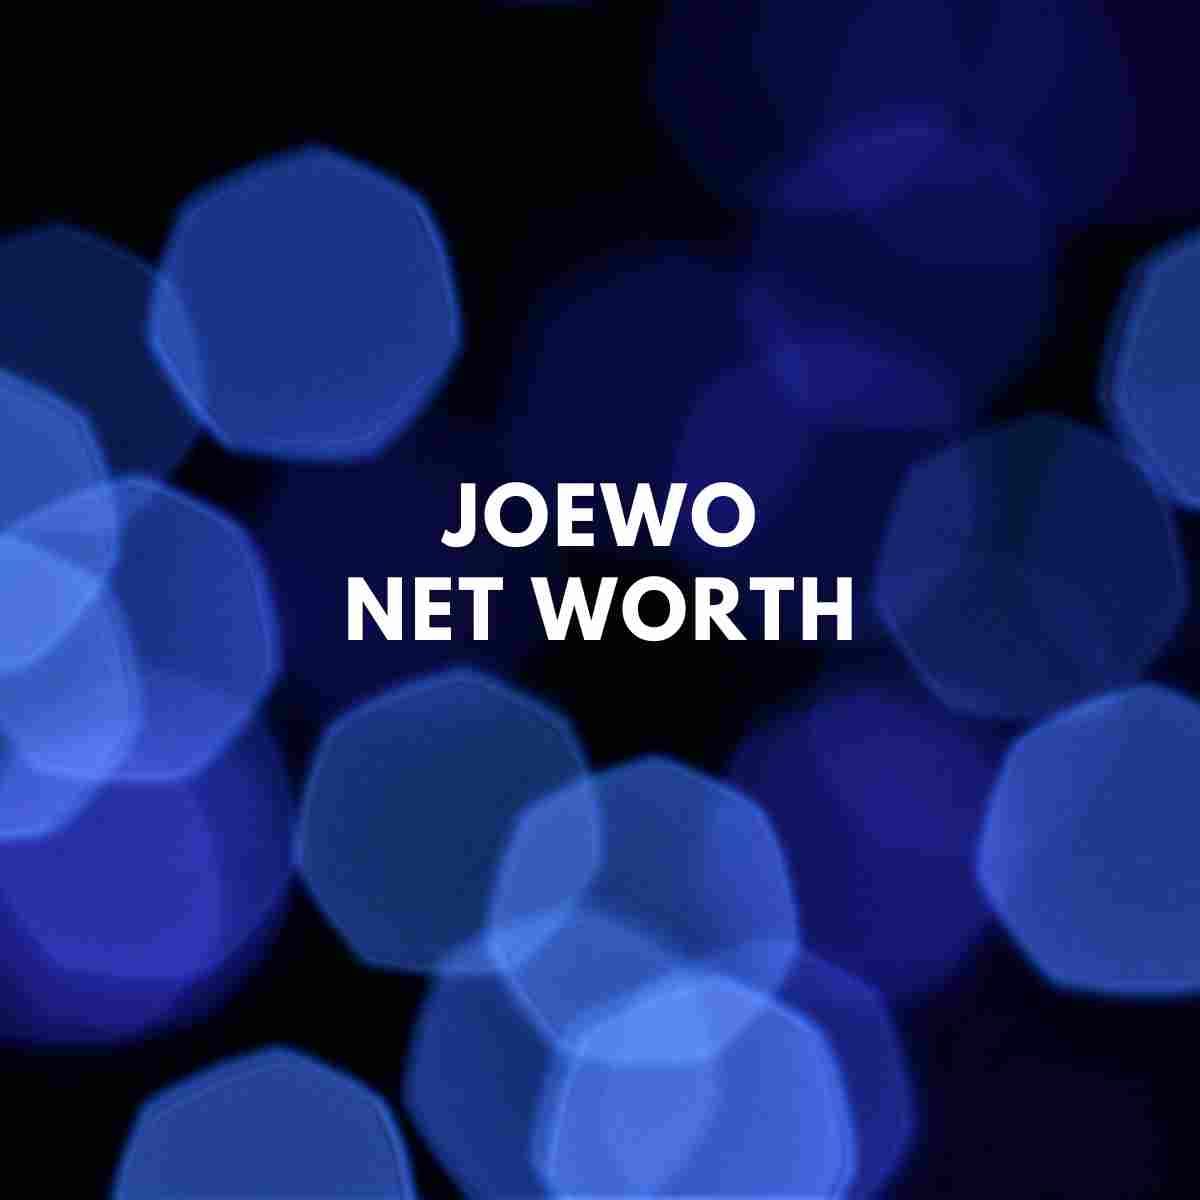 JoeWo net worth